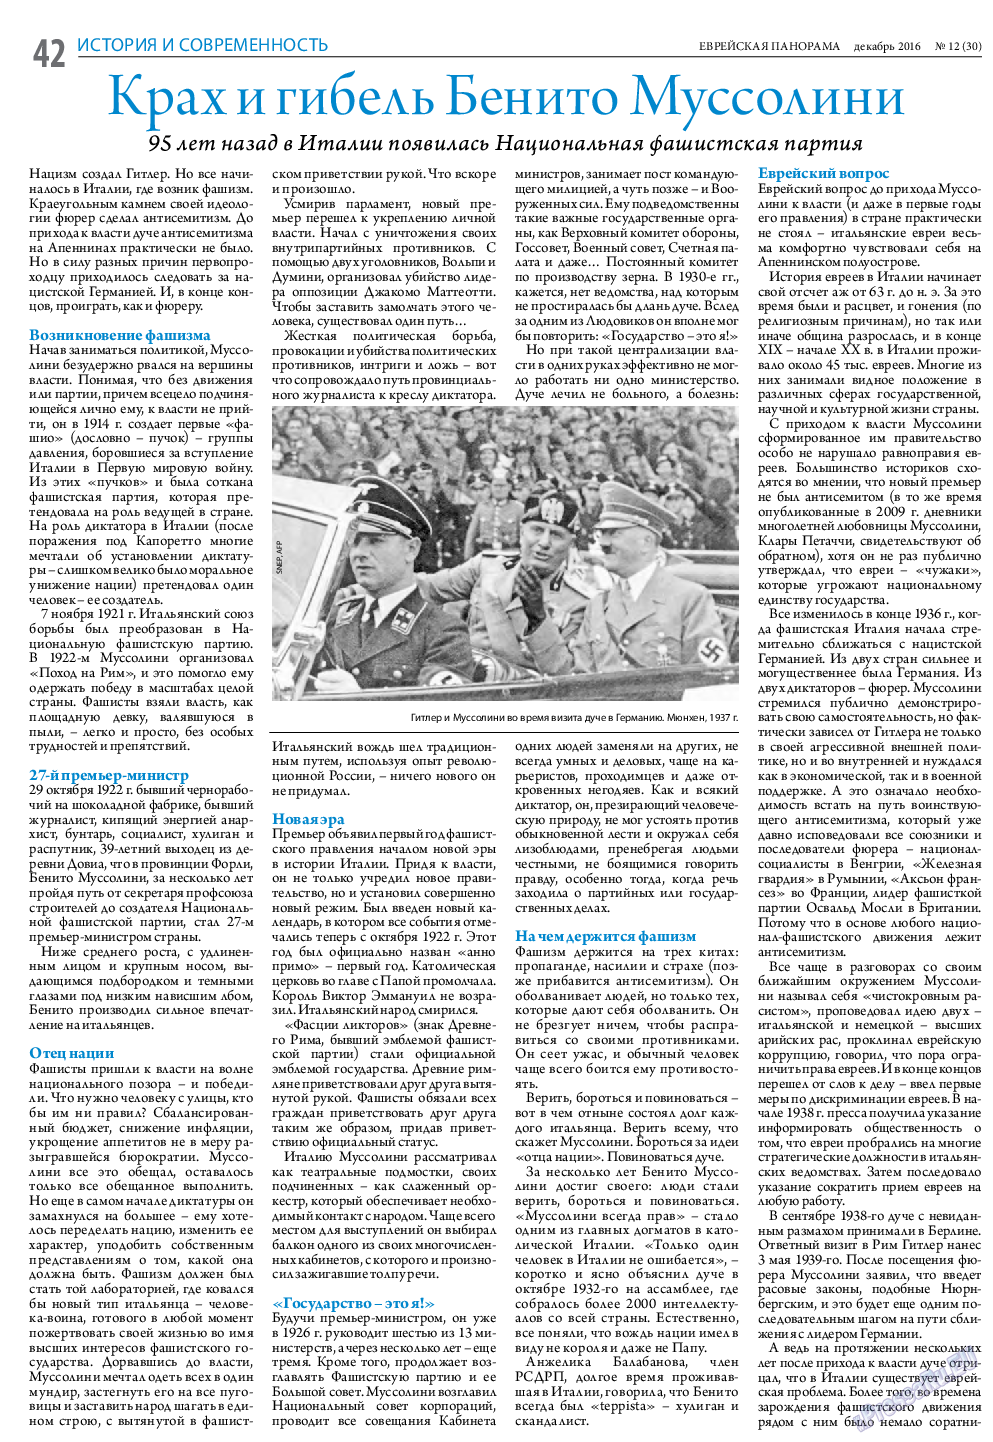 Еврейская панорама, газета. 2016 №12 стр.42